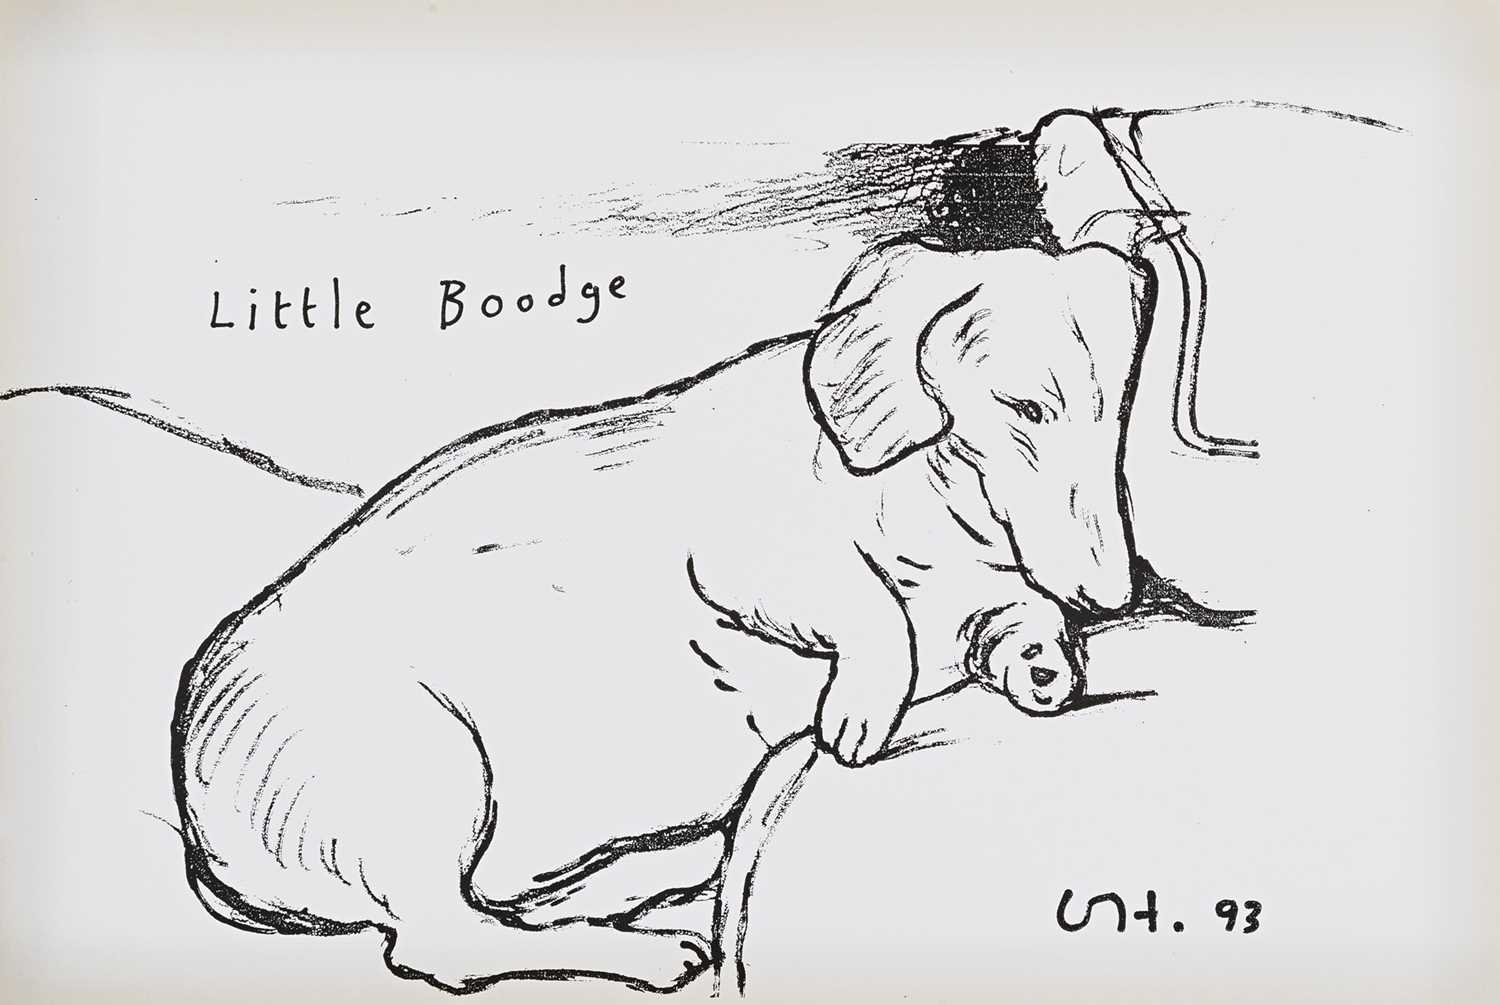 Lot 47 - David Hockney (British 1937-), 'Little Boodge' 1993